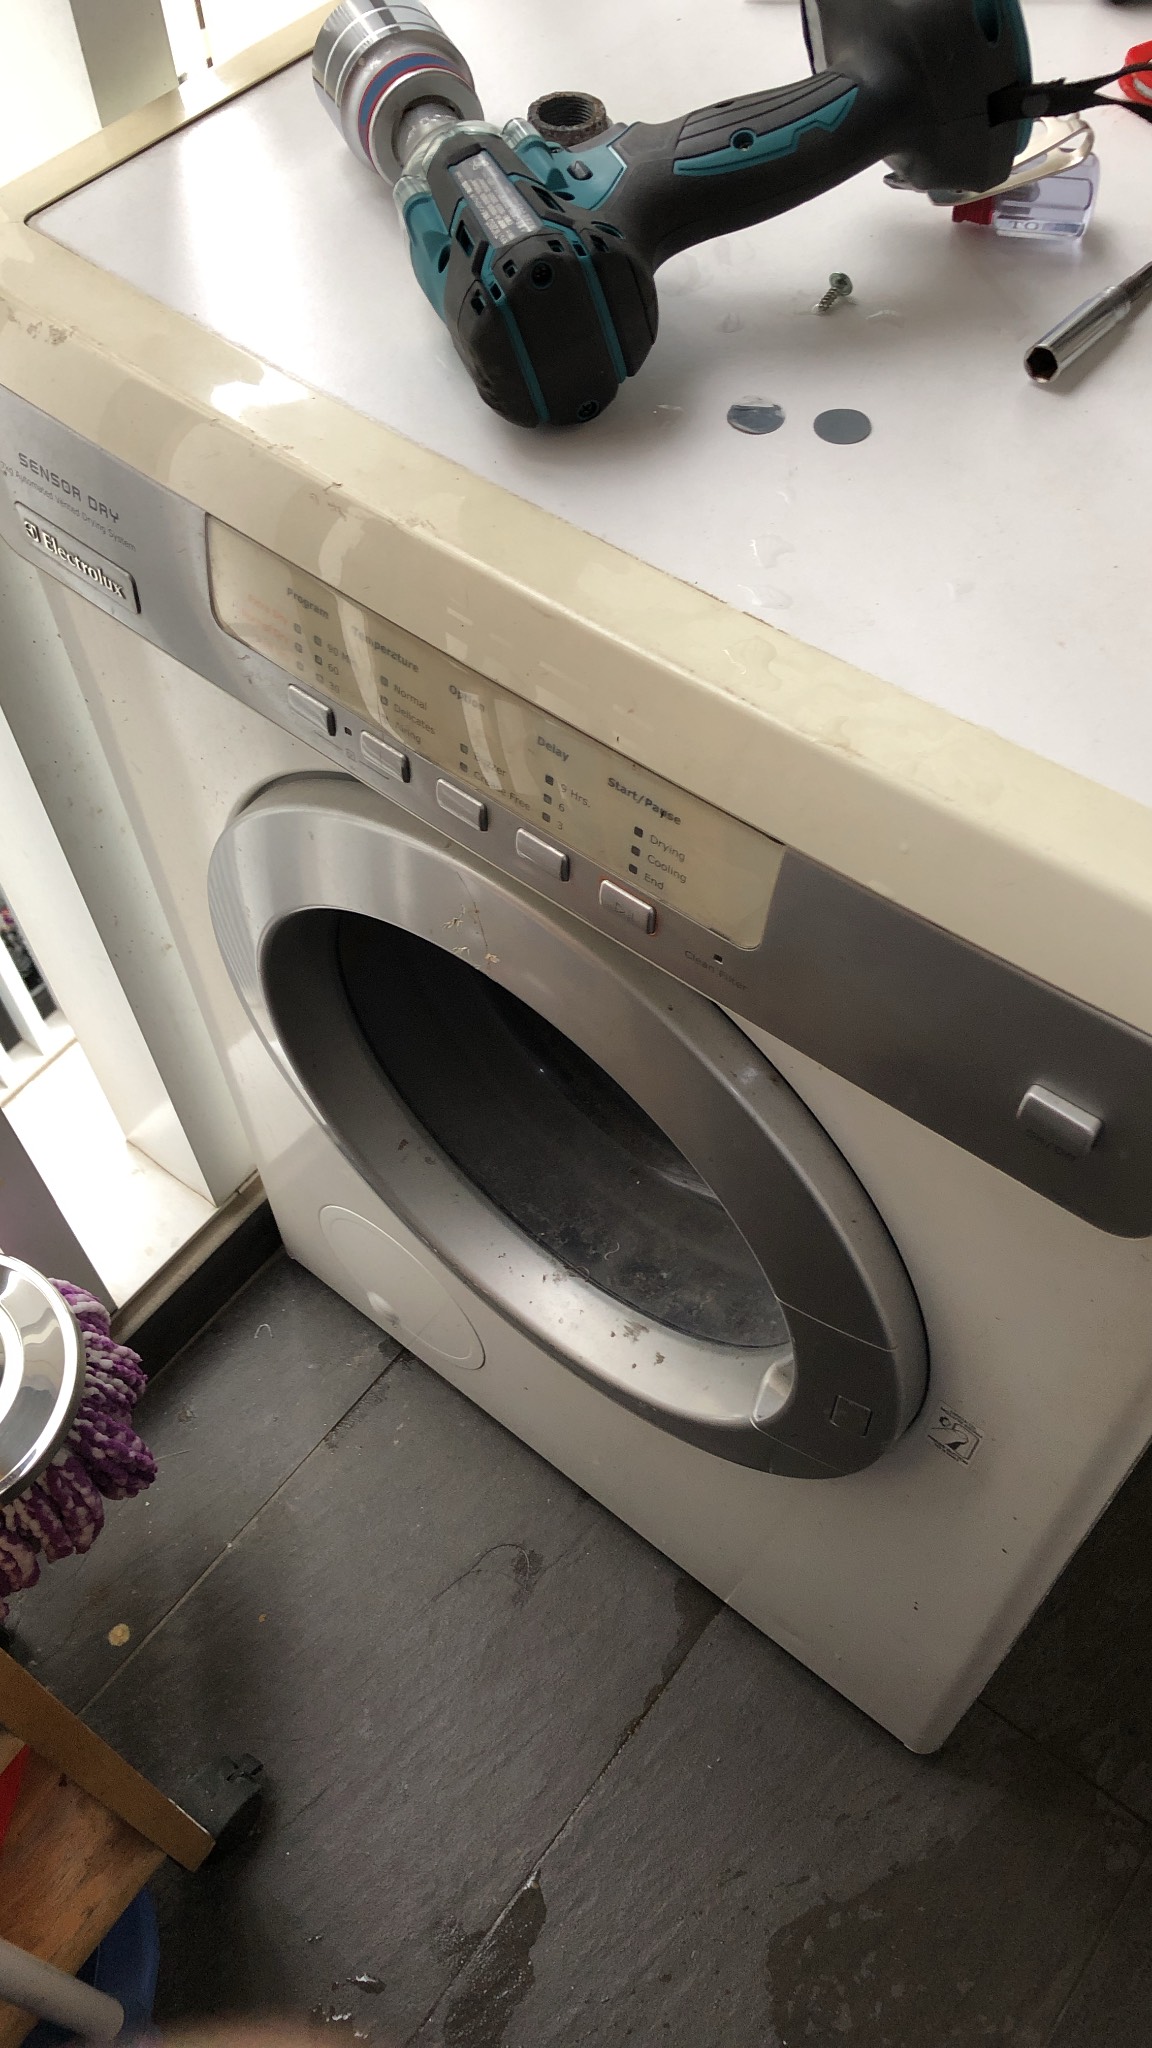 lỗi e10 máy giặt electrolux